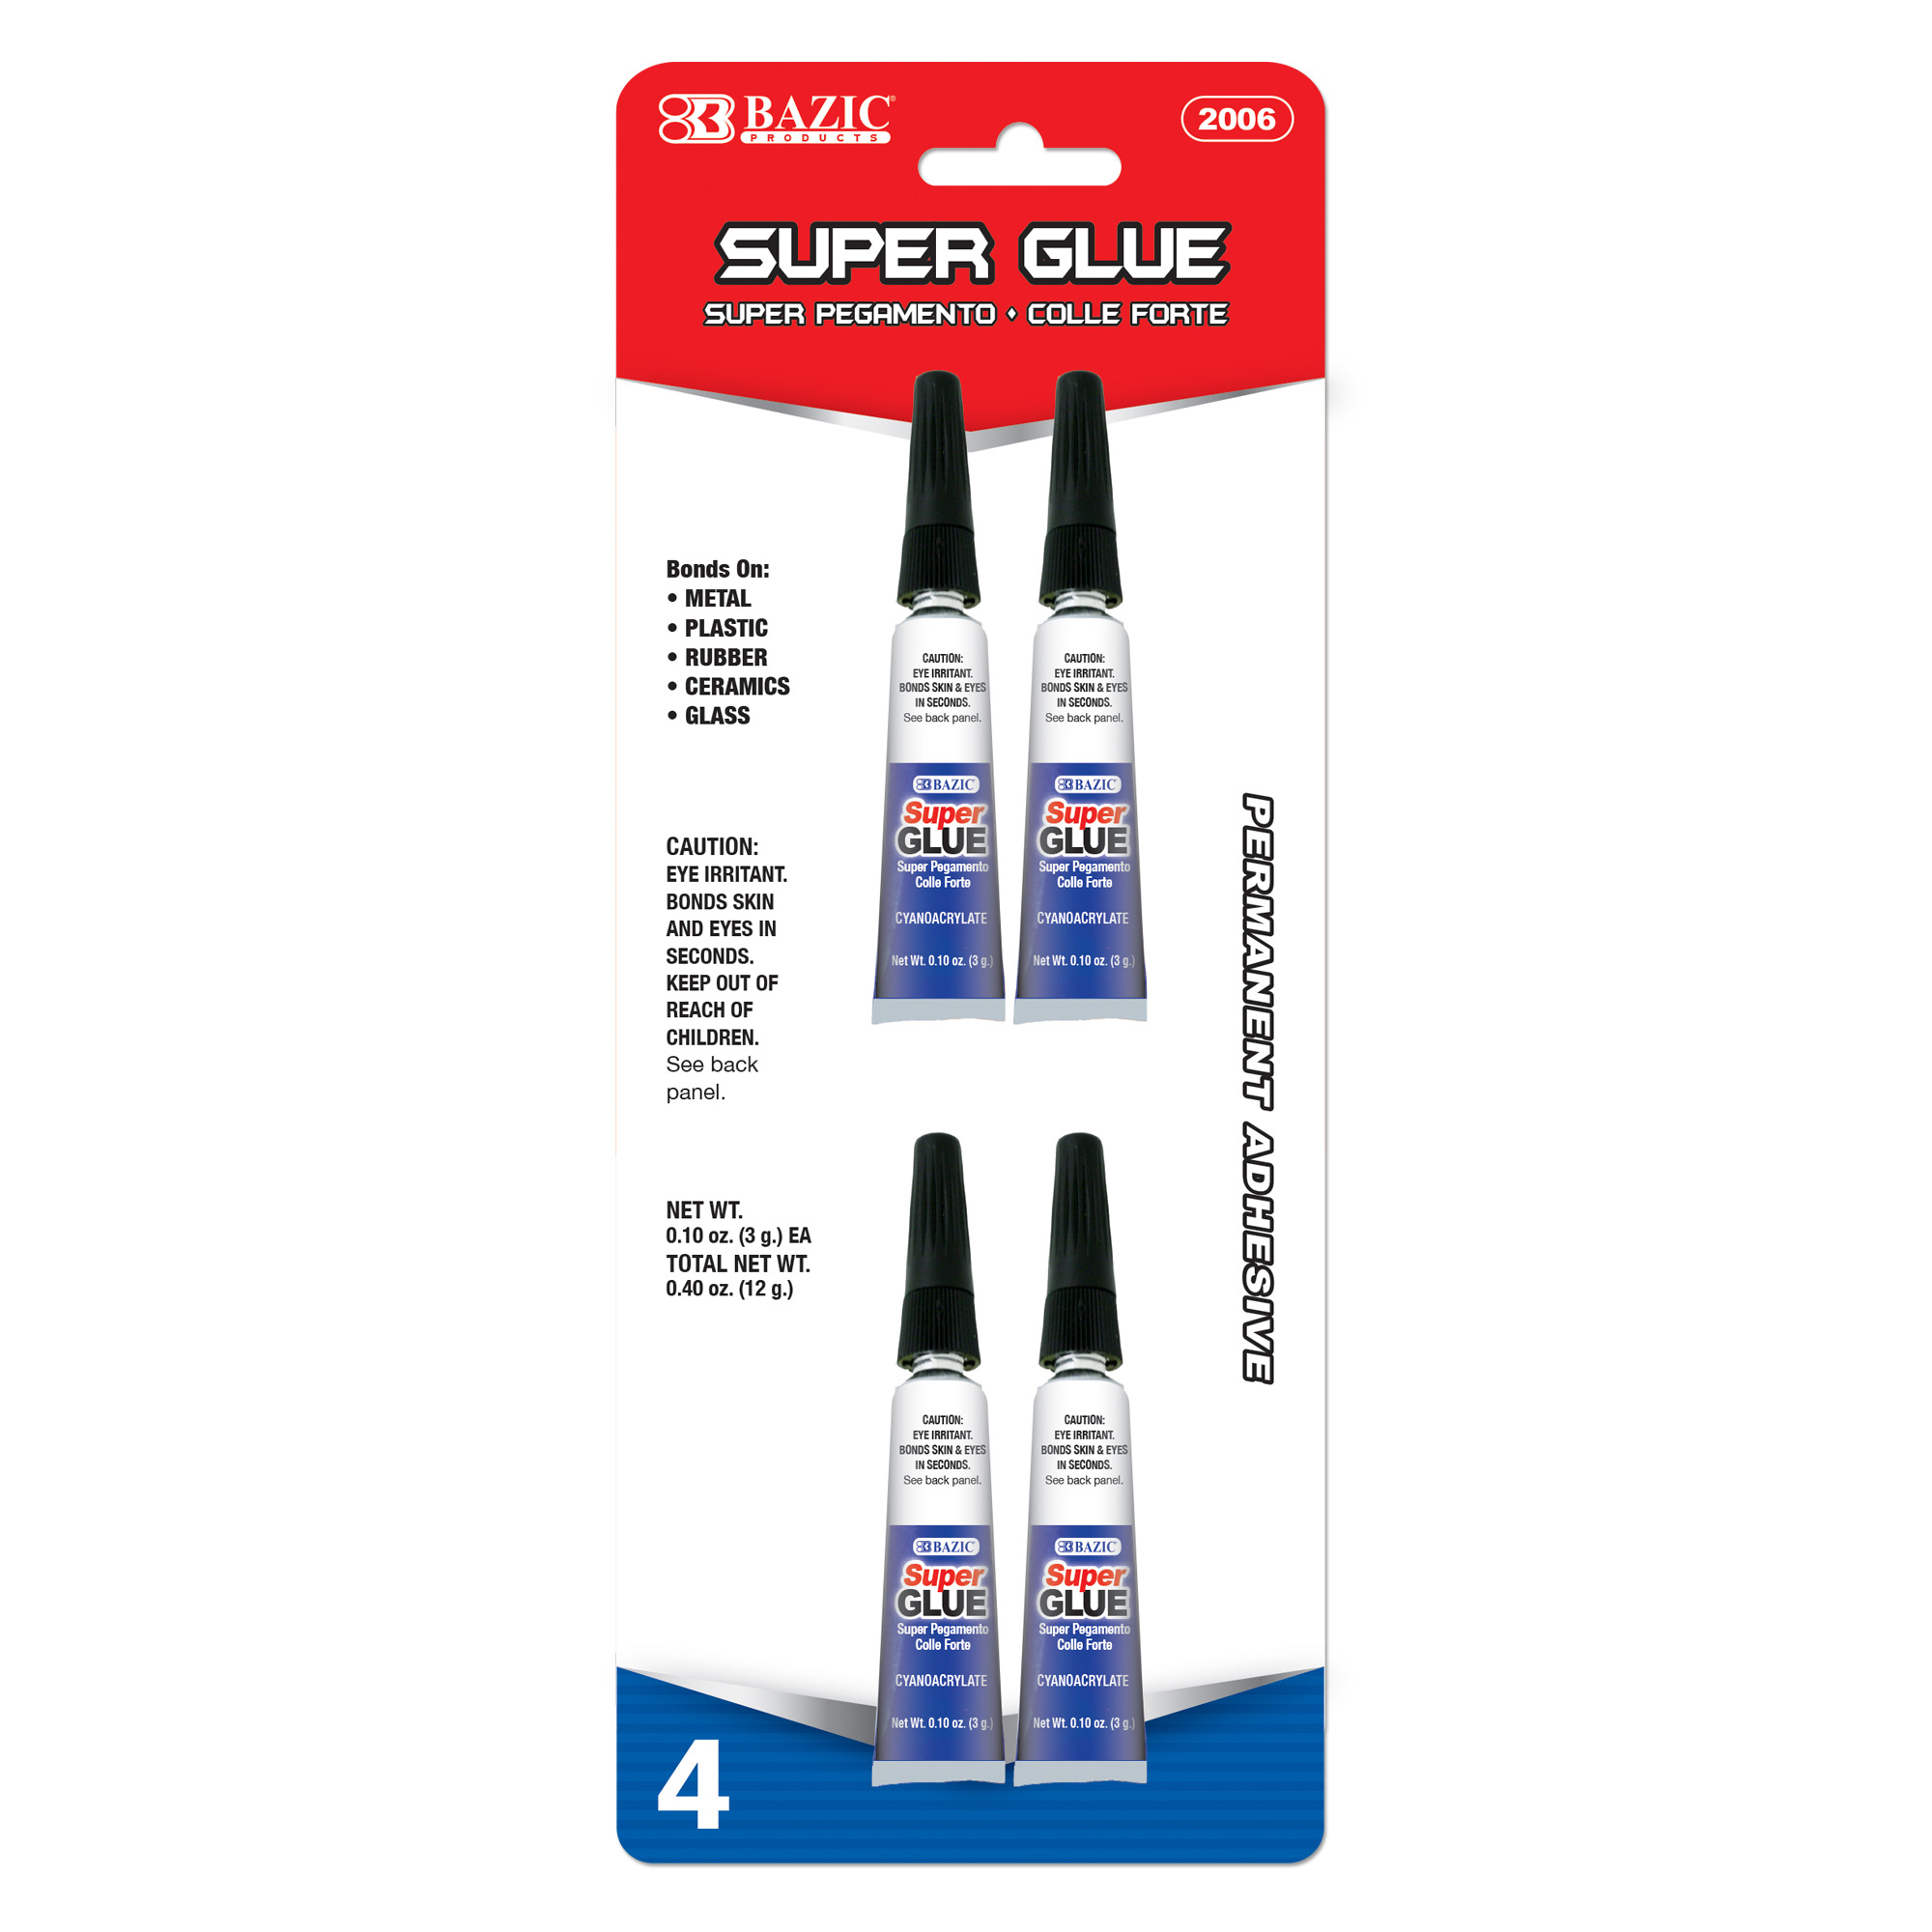 0.10 oz (3g) Super Glue Pen w/ Precision Tip Applicator 24 packs